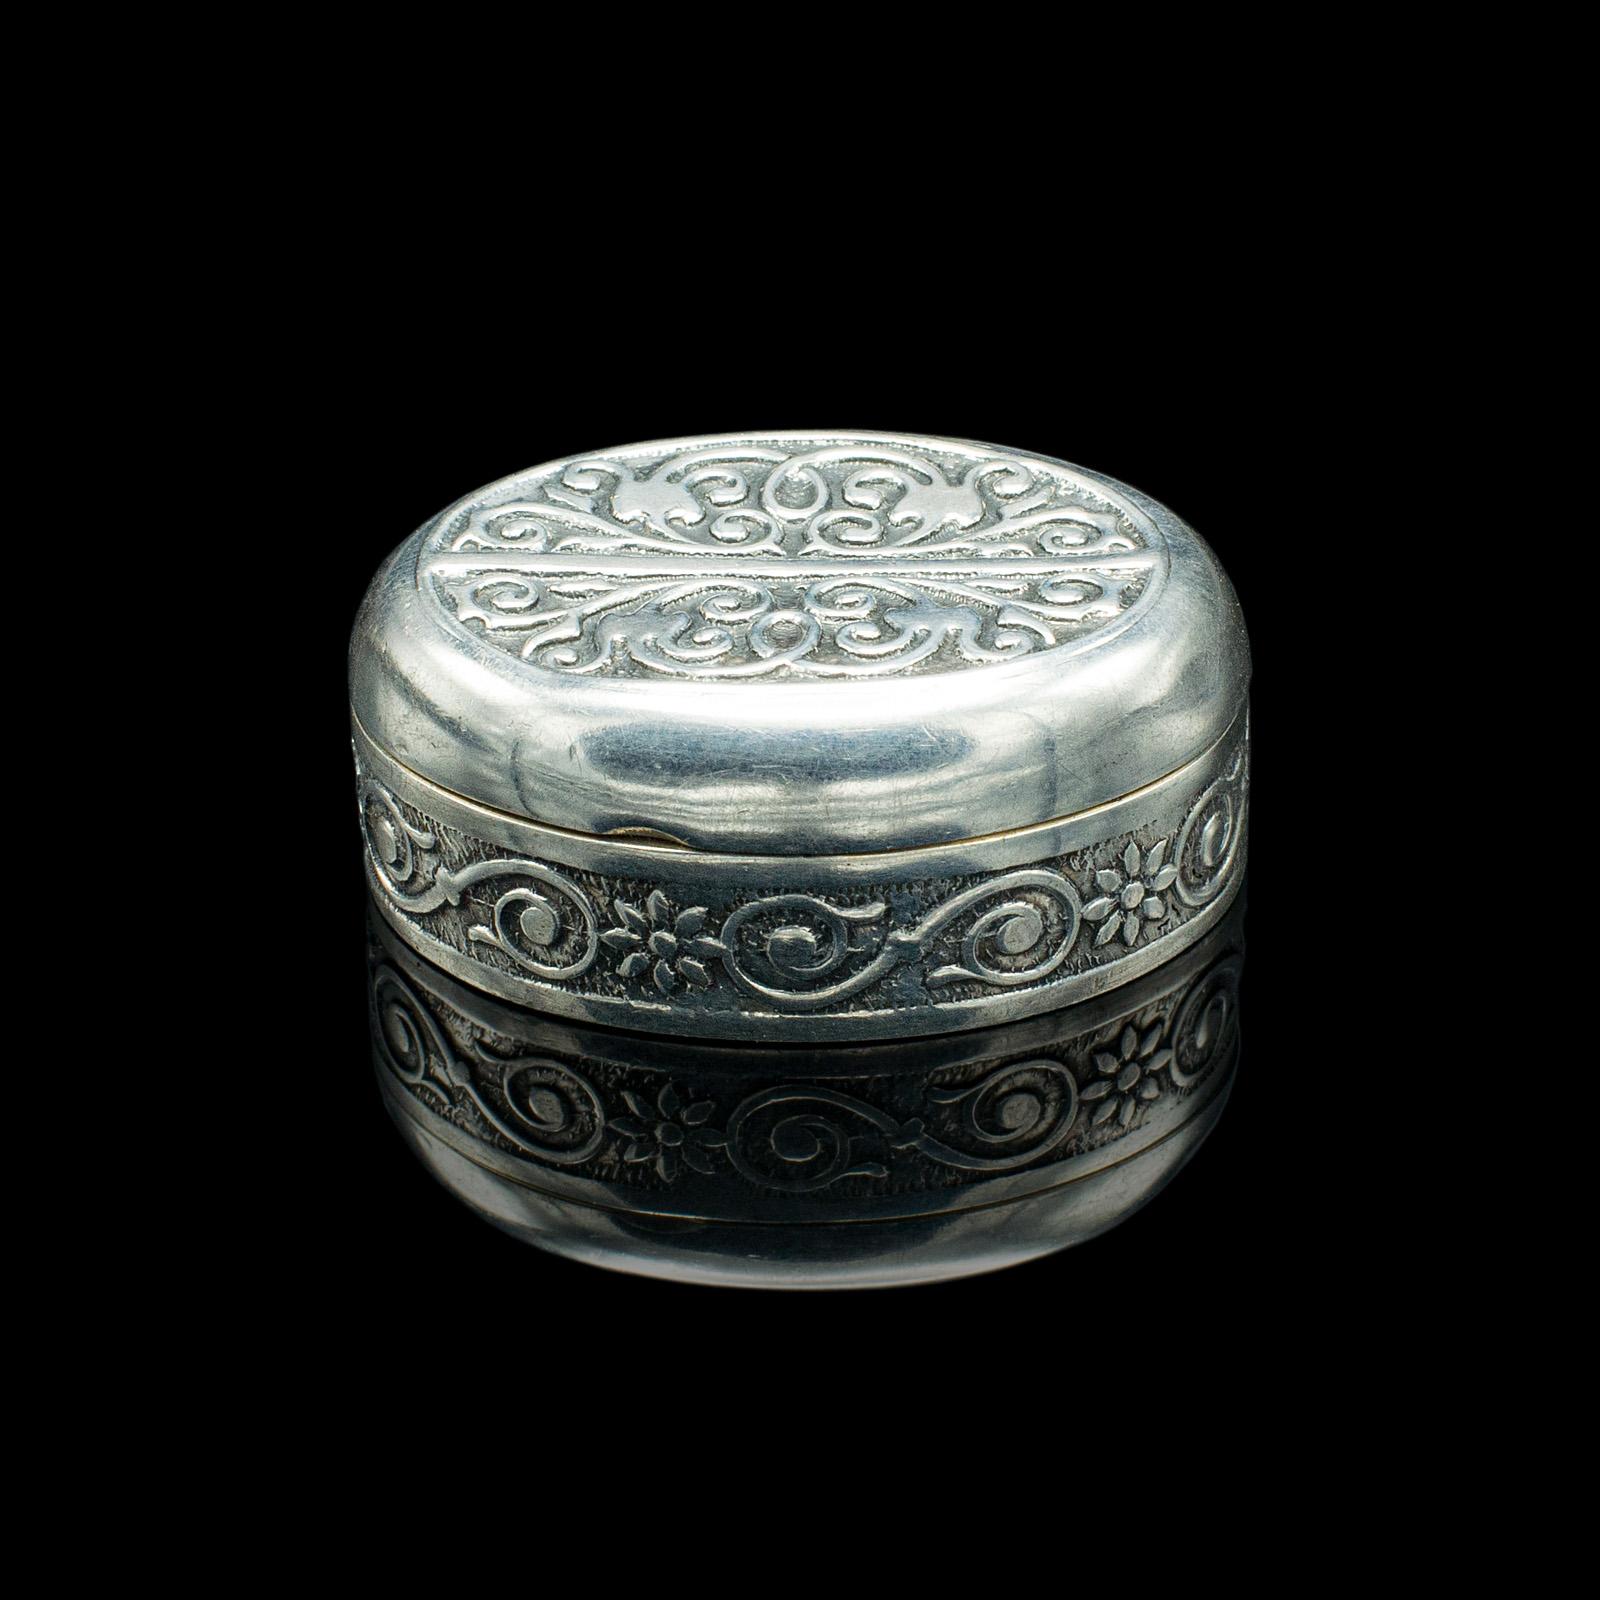 European Small Antique Snuff Pot, Continental, Silver, Pill Box, Art Nouveau, Victorian